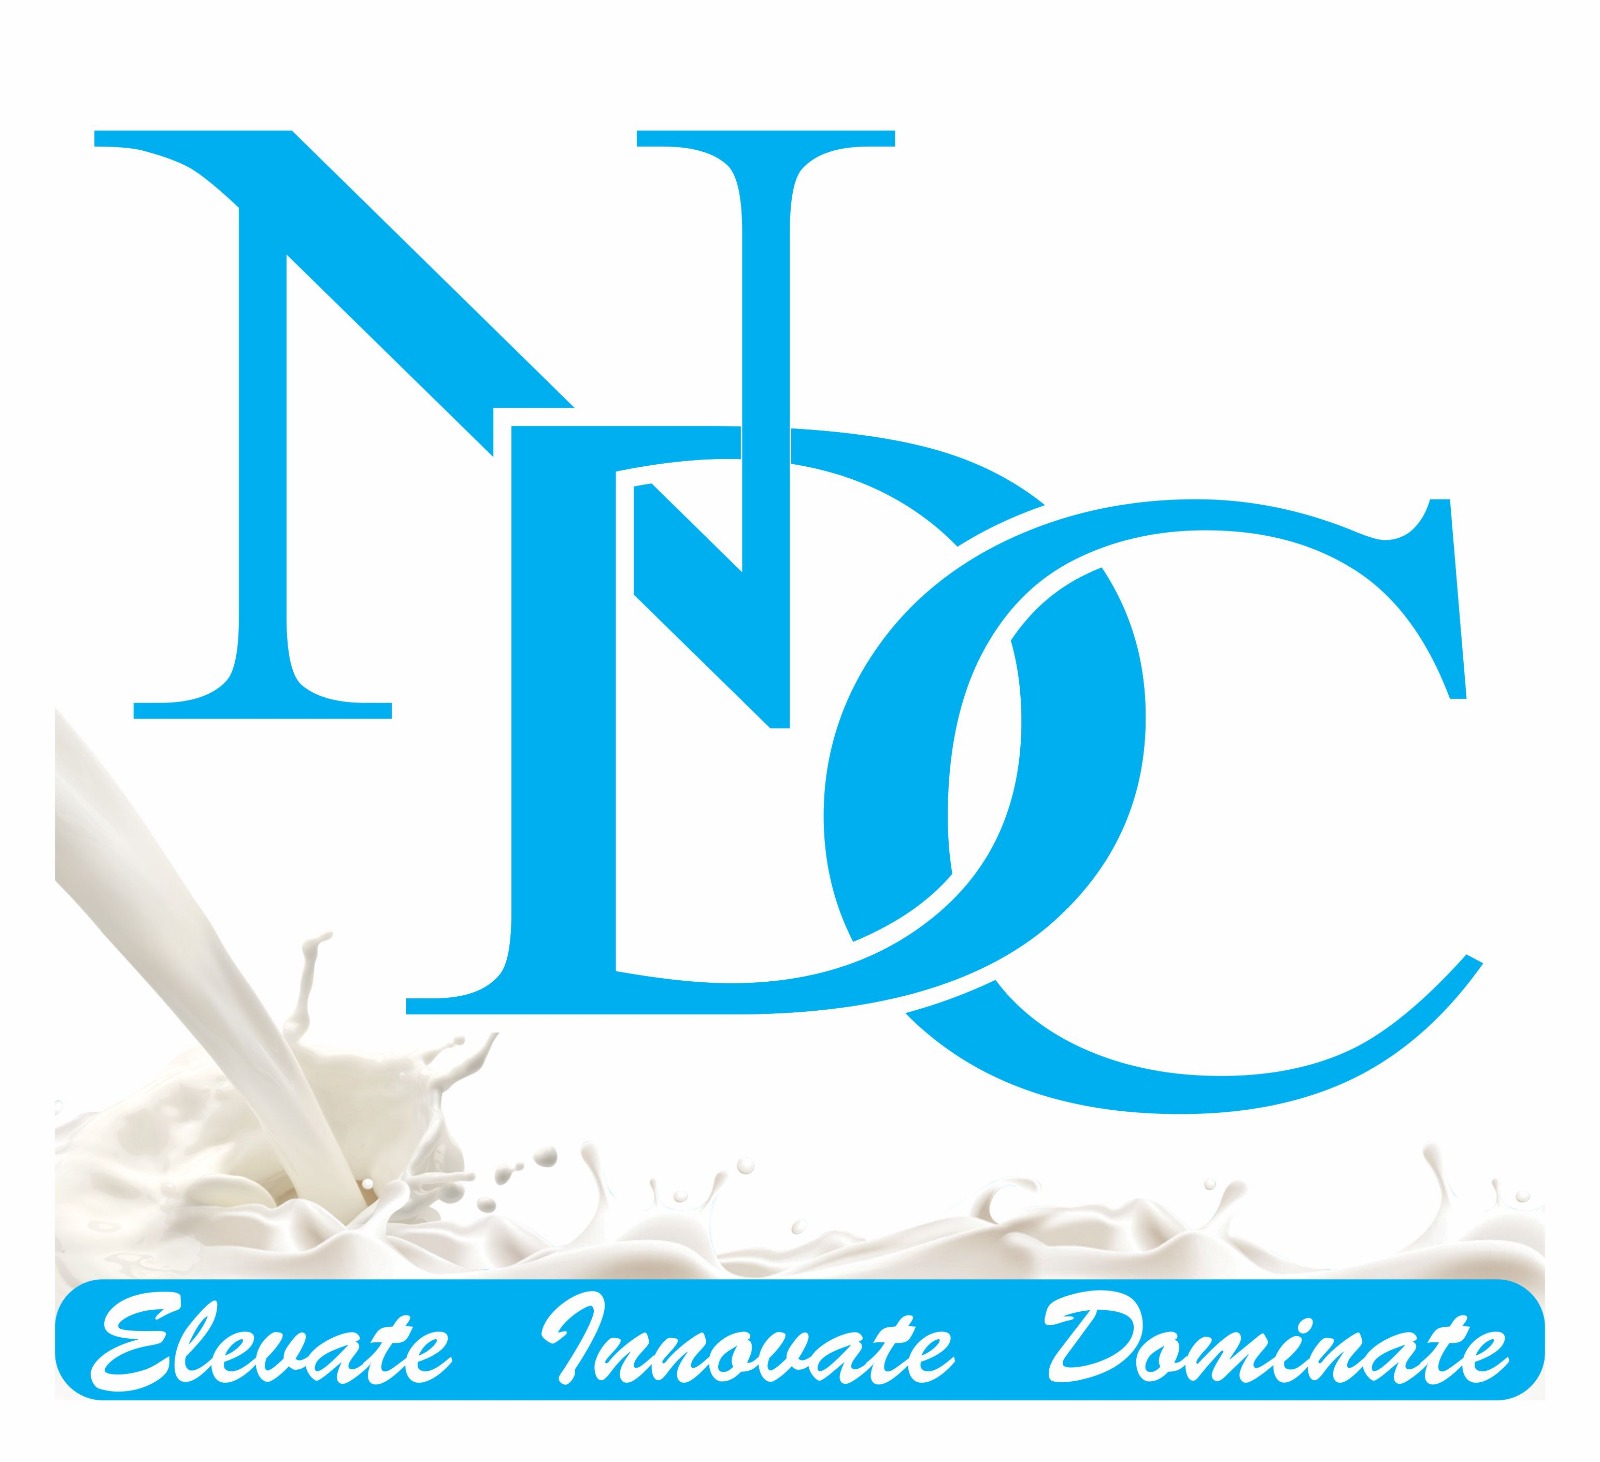 NextGen Dairy Consultancy Services